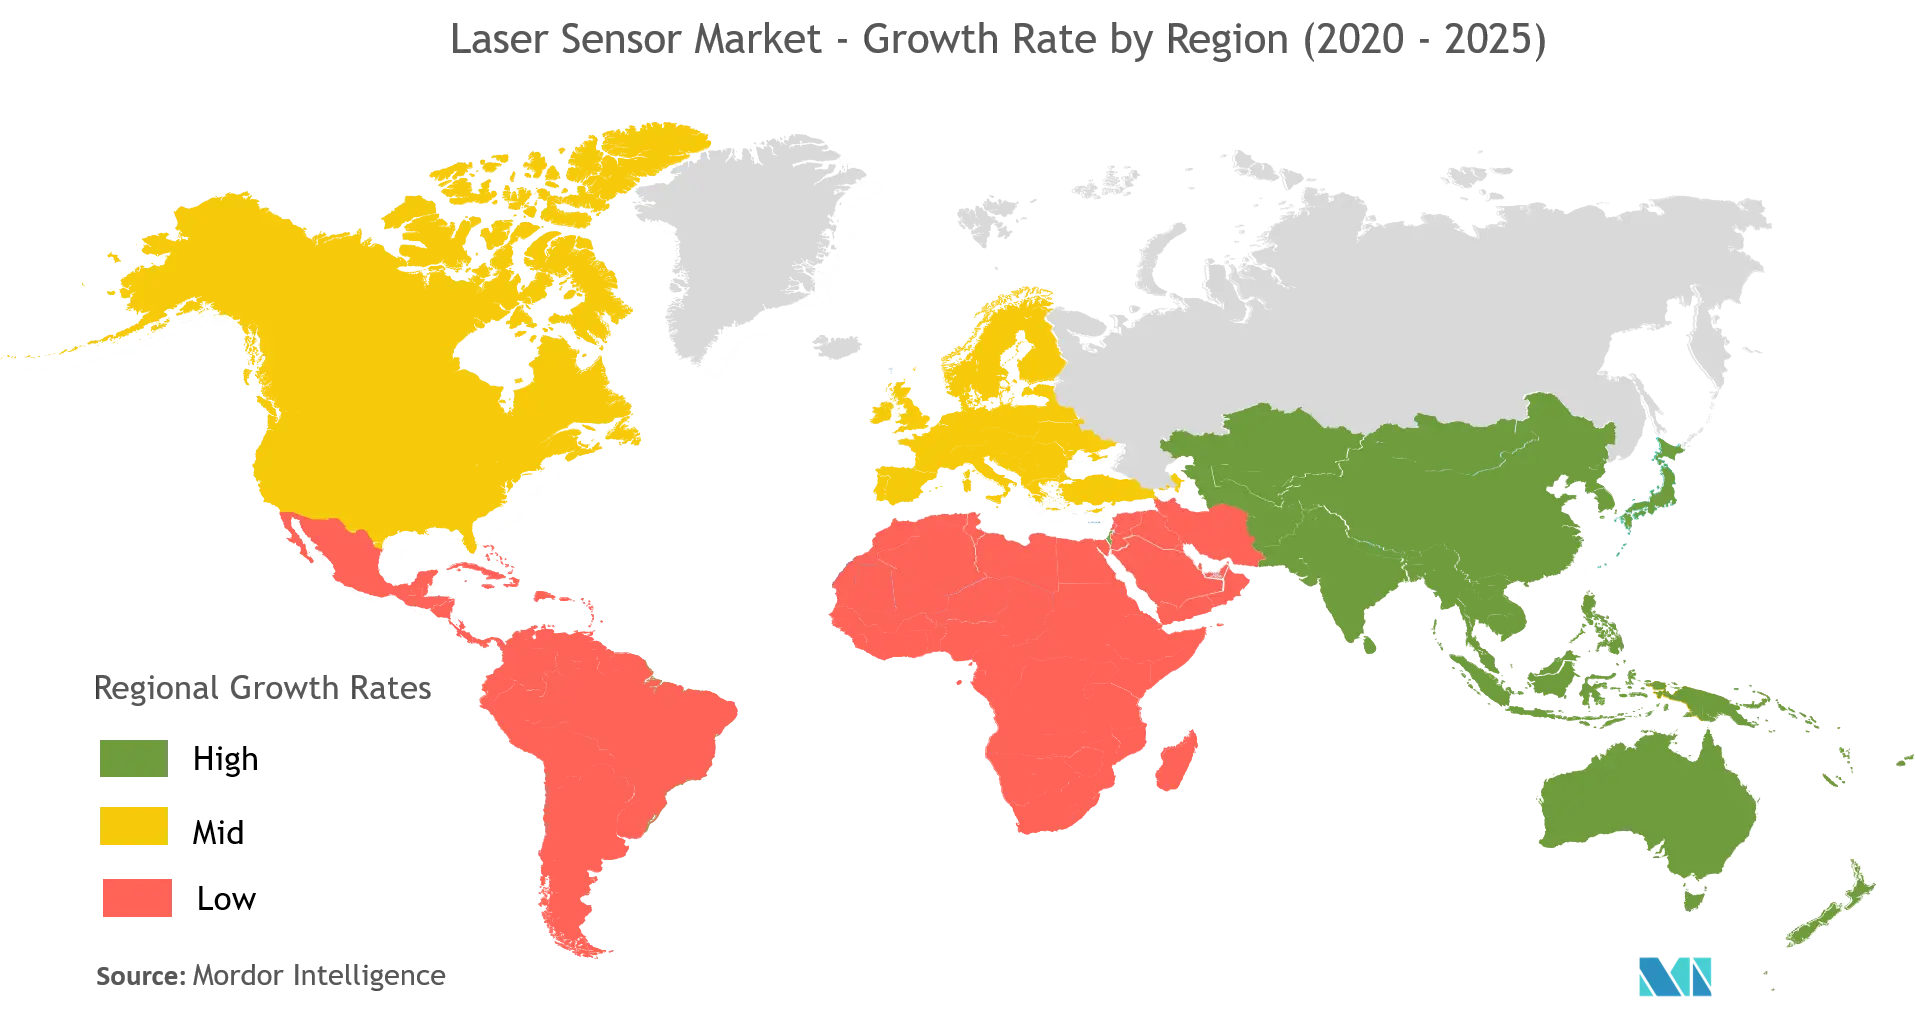 Laser Sensor Market - Growth Rate by Region (2020 - 2025)